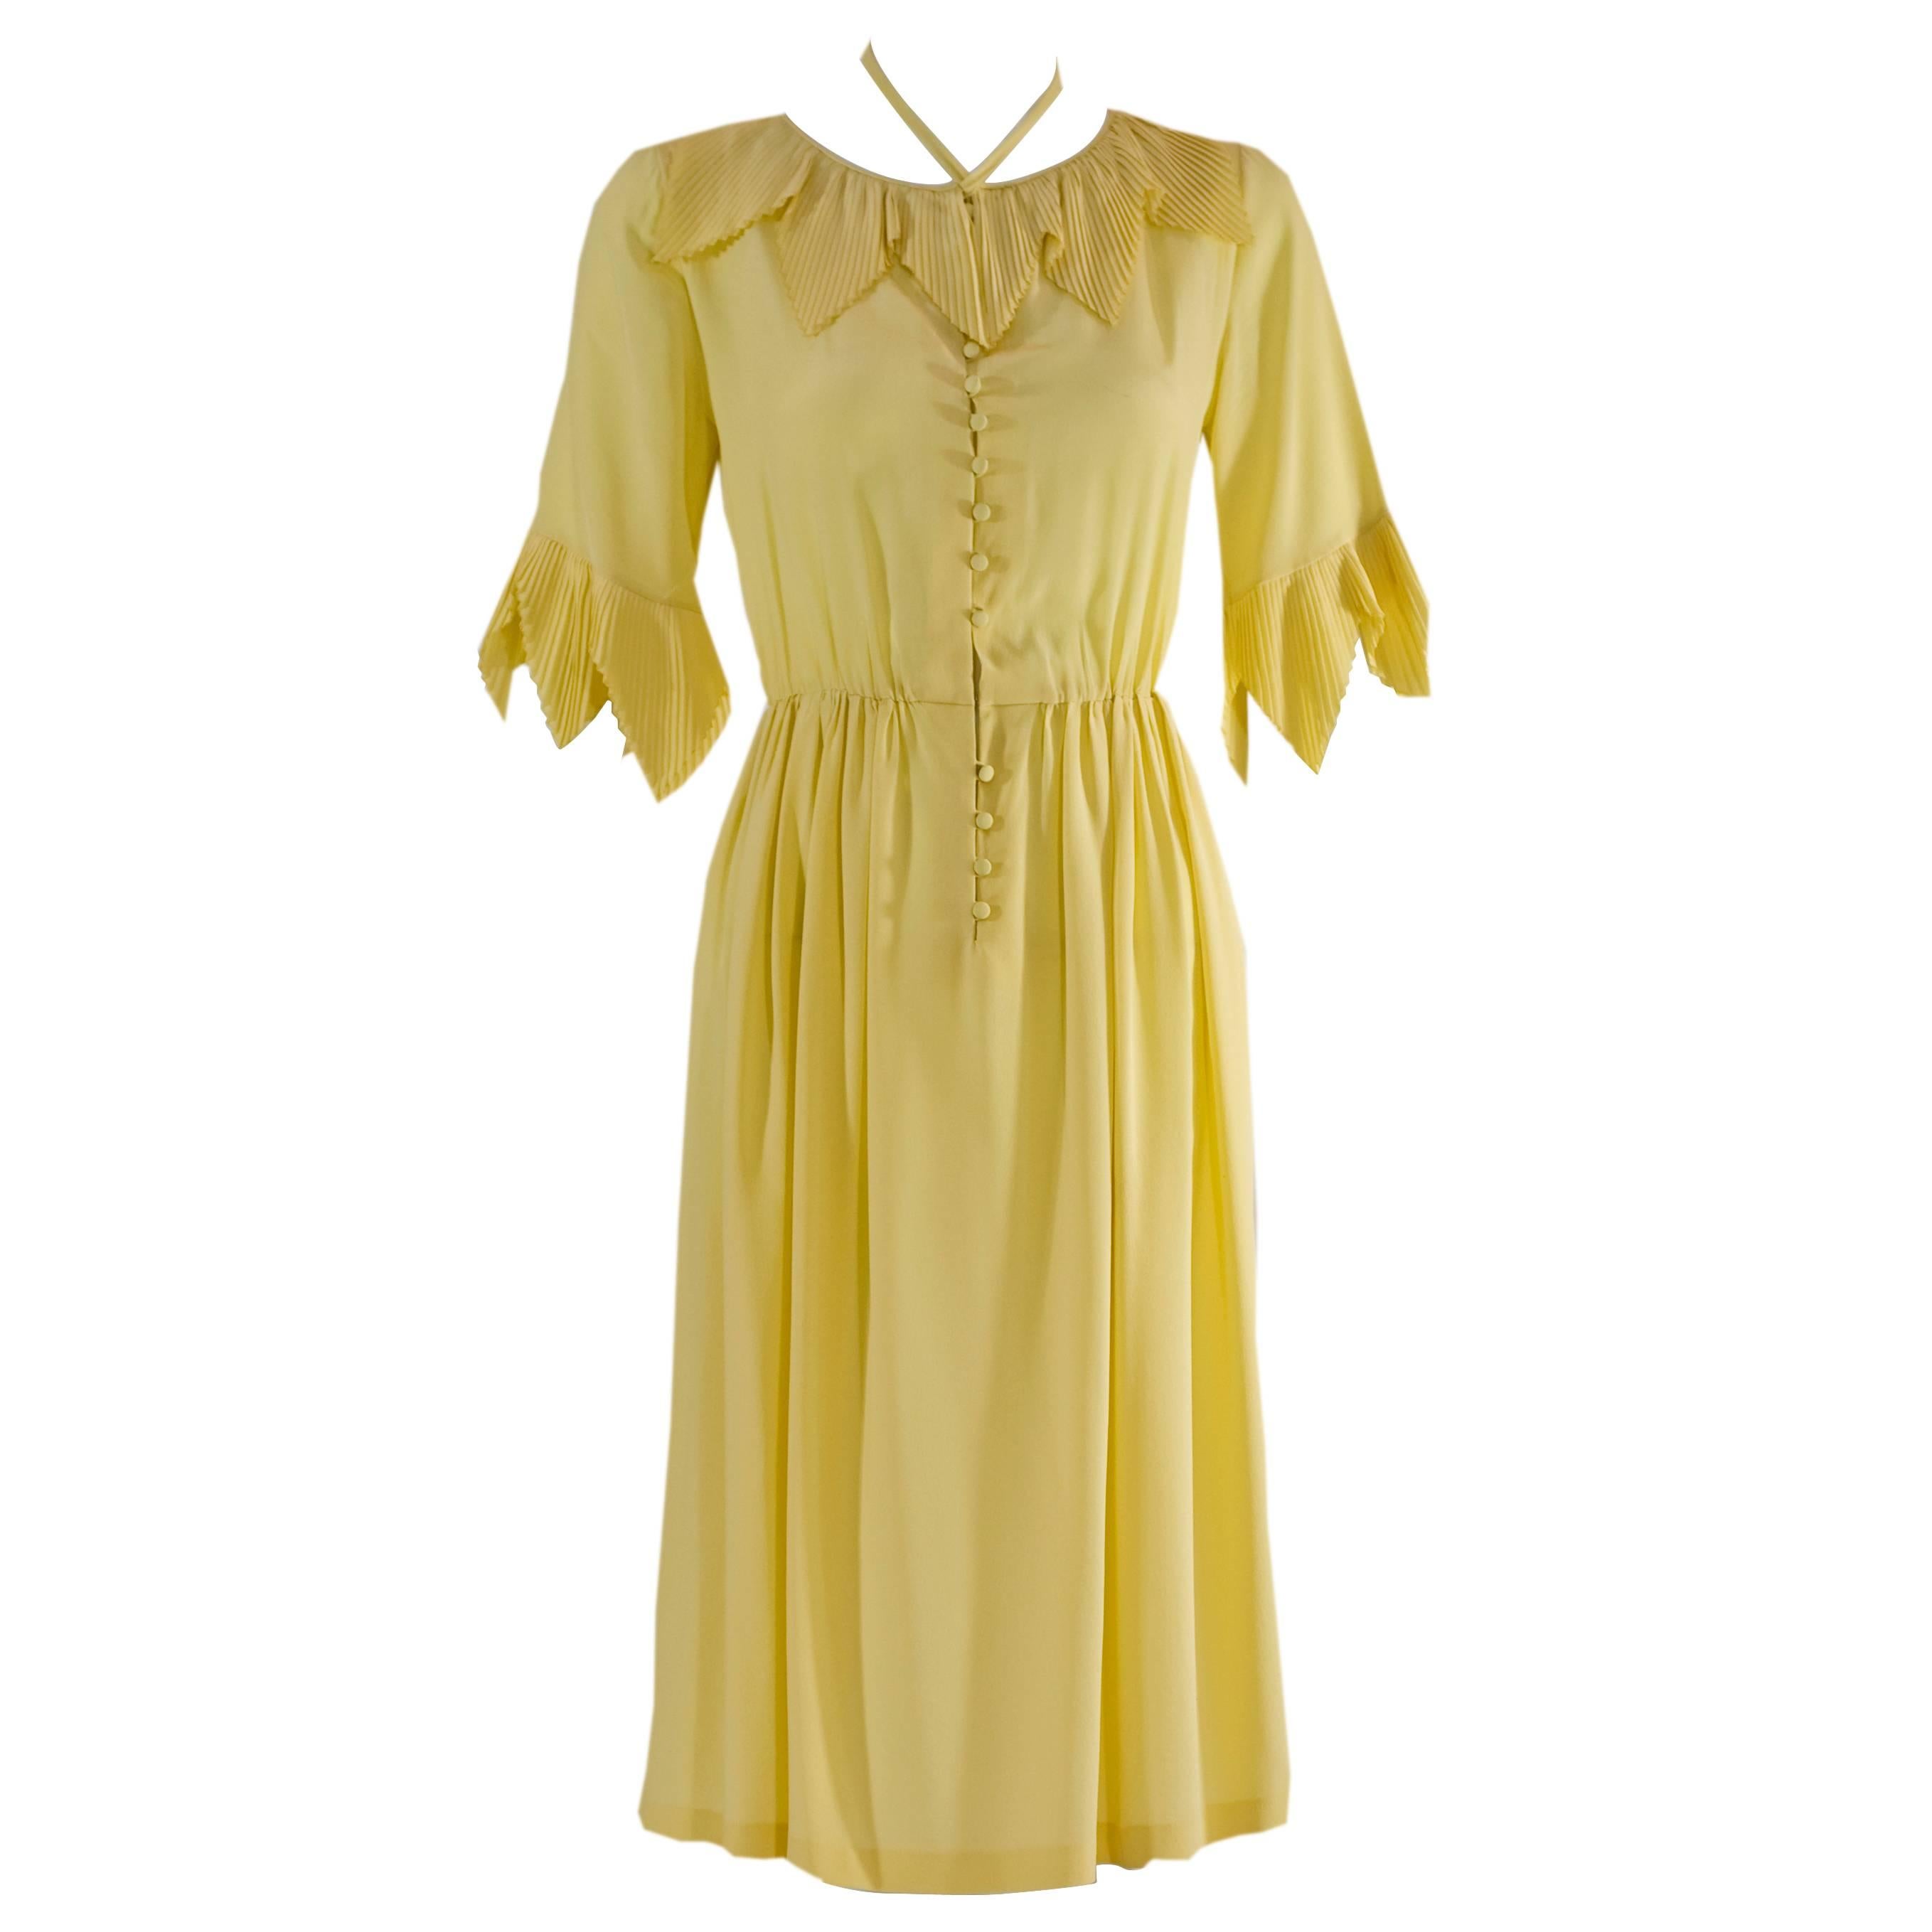 Karl Lagerfeld for Chloé Soft Yellow Silk Accordion Pleat Collar Dress, 1970s